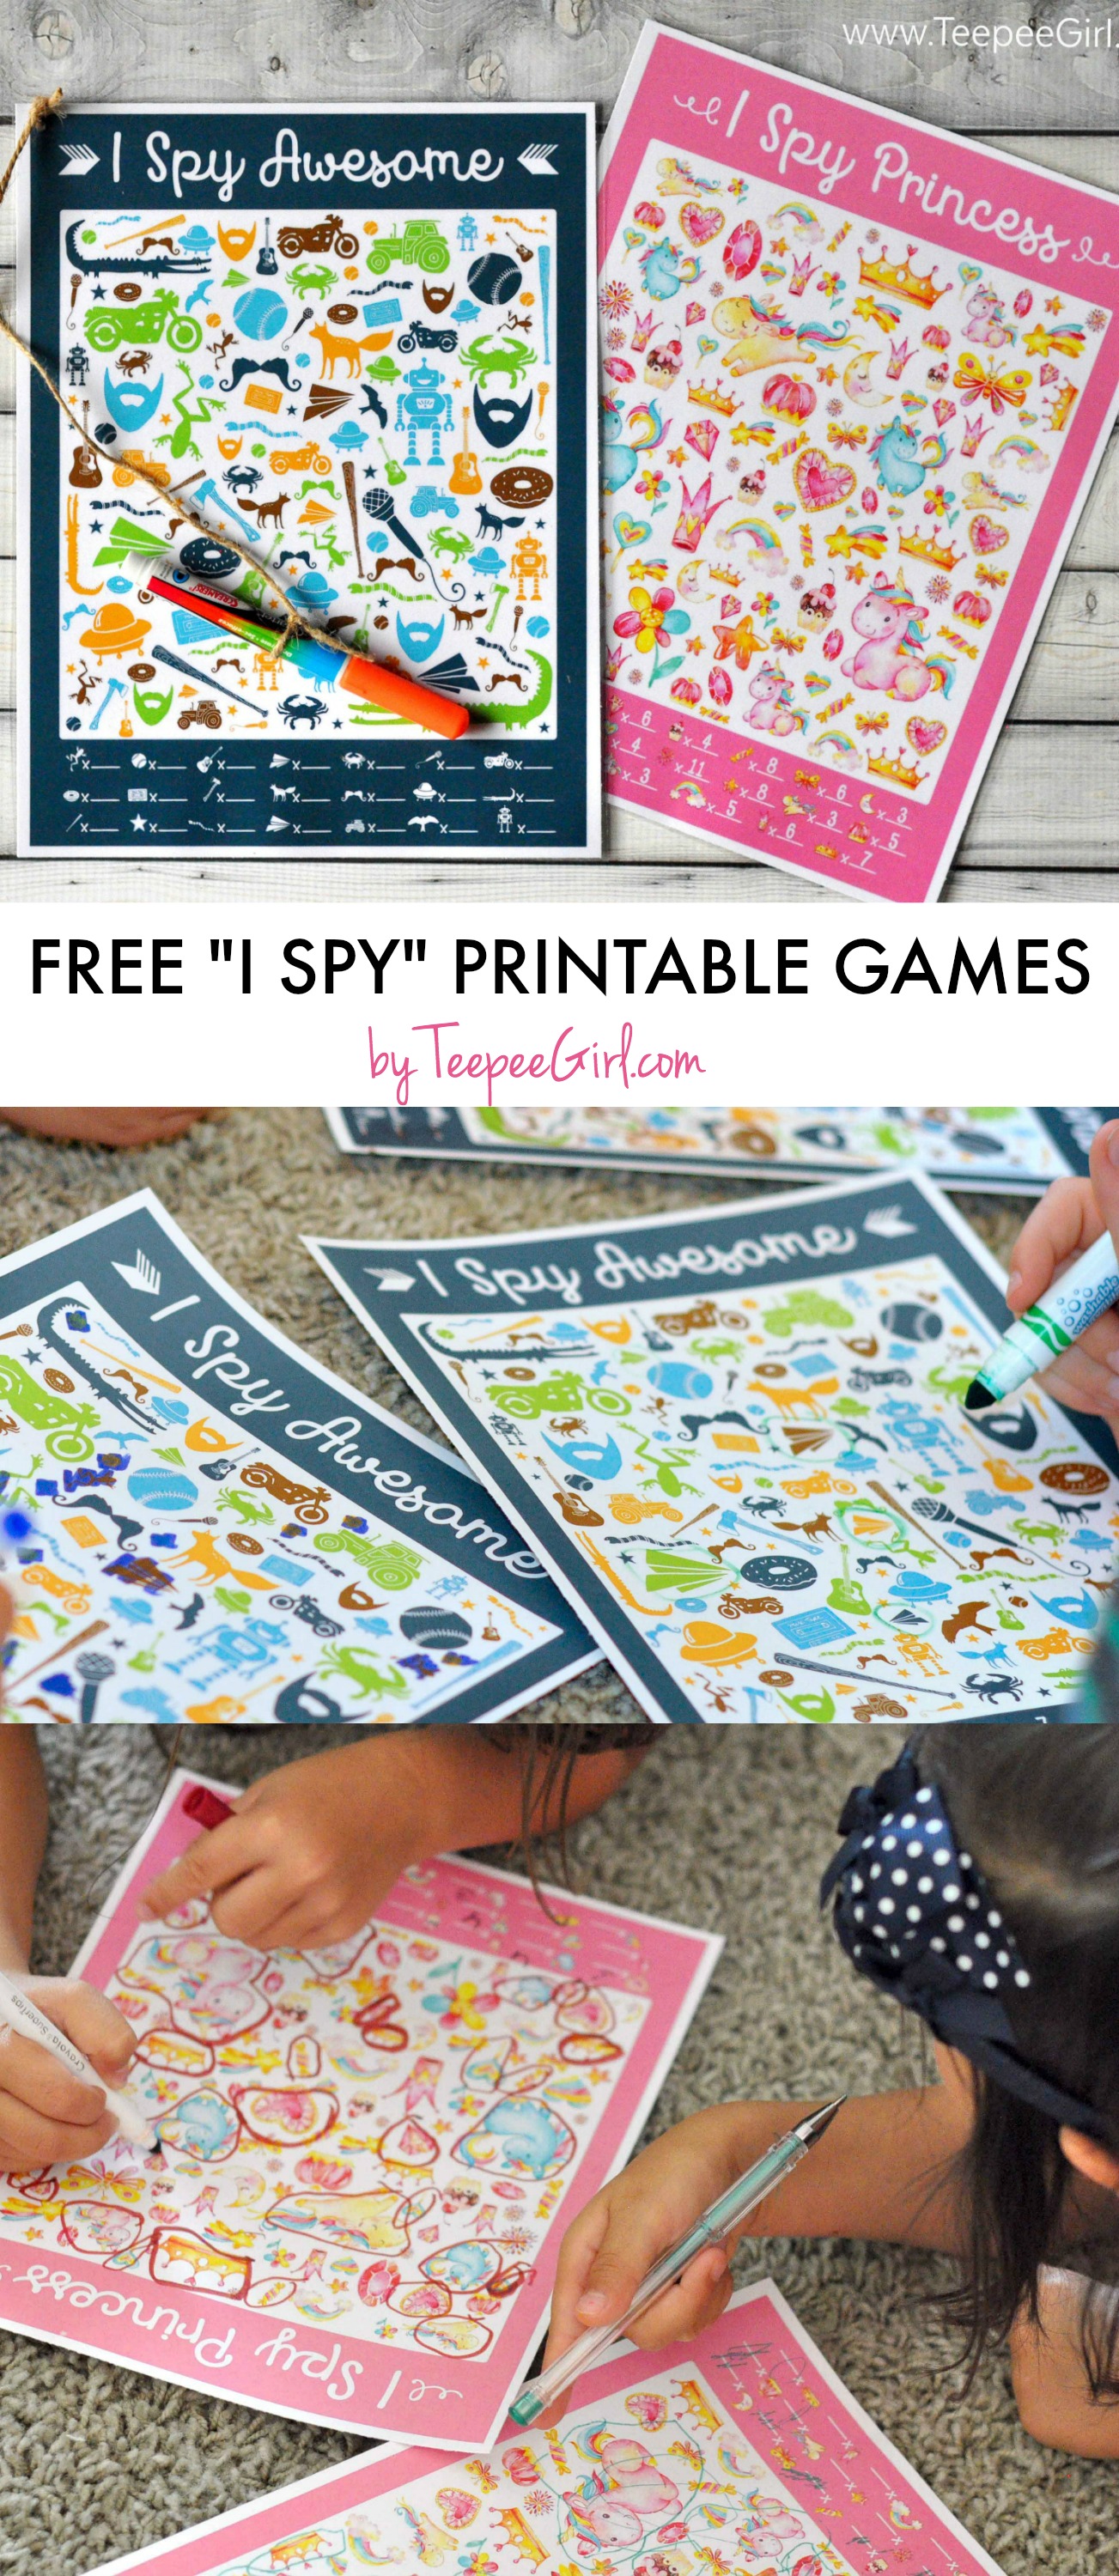 Free iSpy Game Printables by TeePeeGirl - travel, princess, awesome versions!